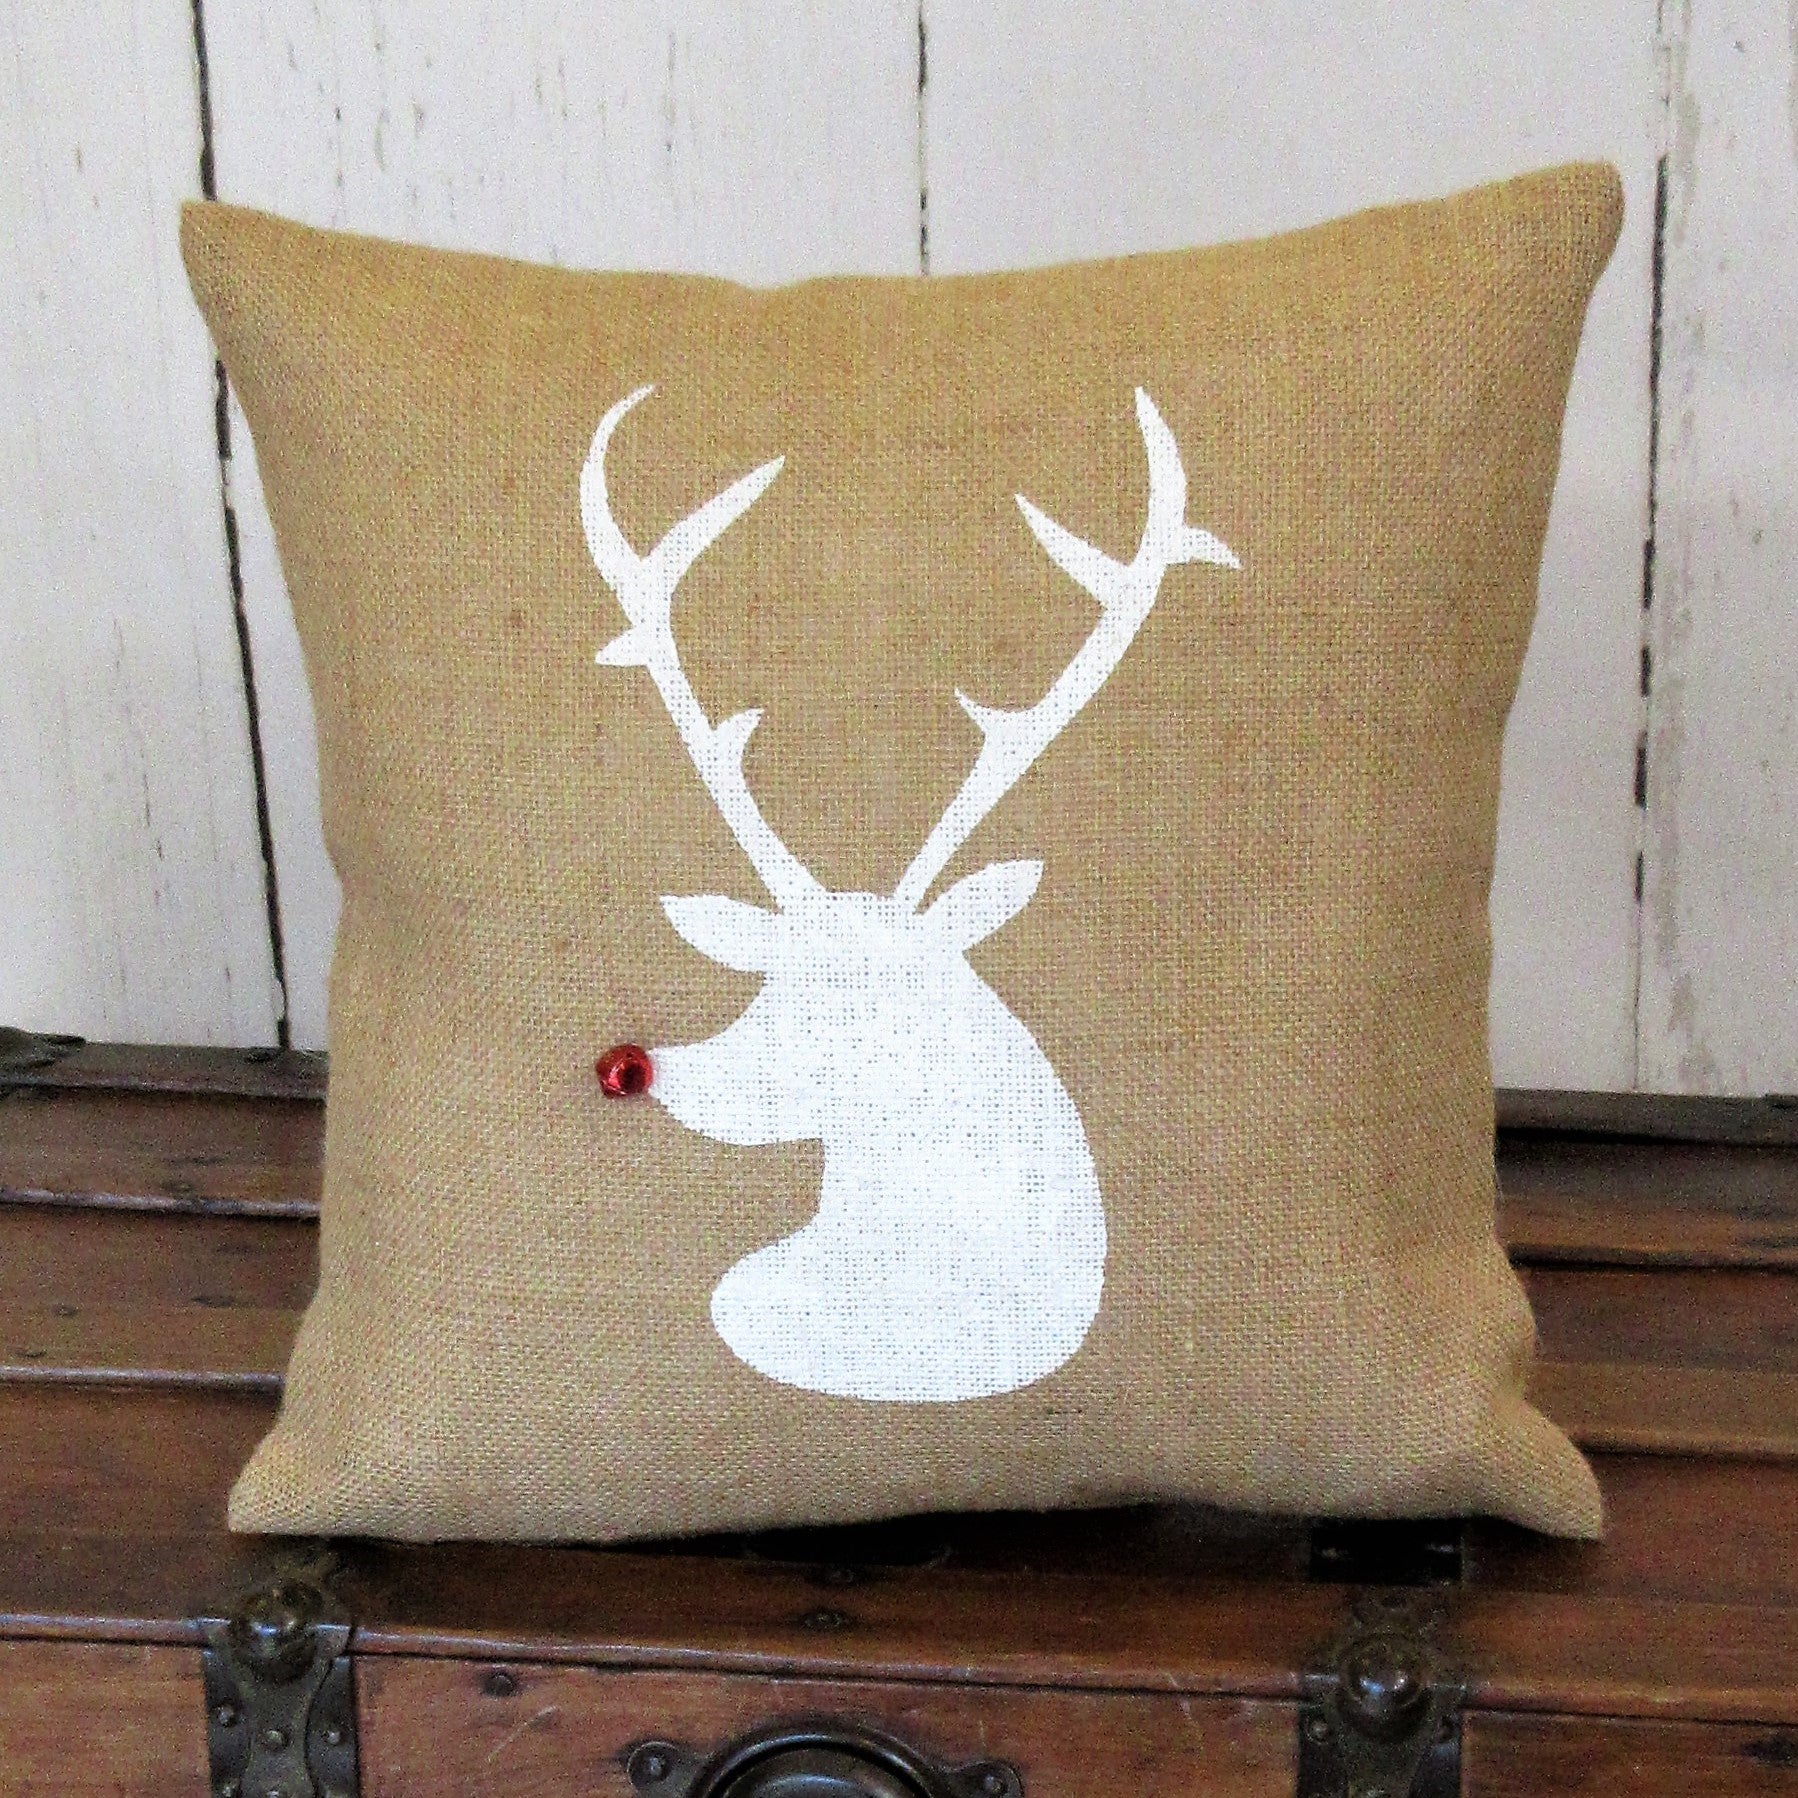 Rudolph reindeer Head Burlap Pillow